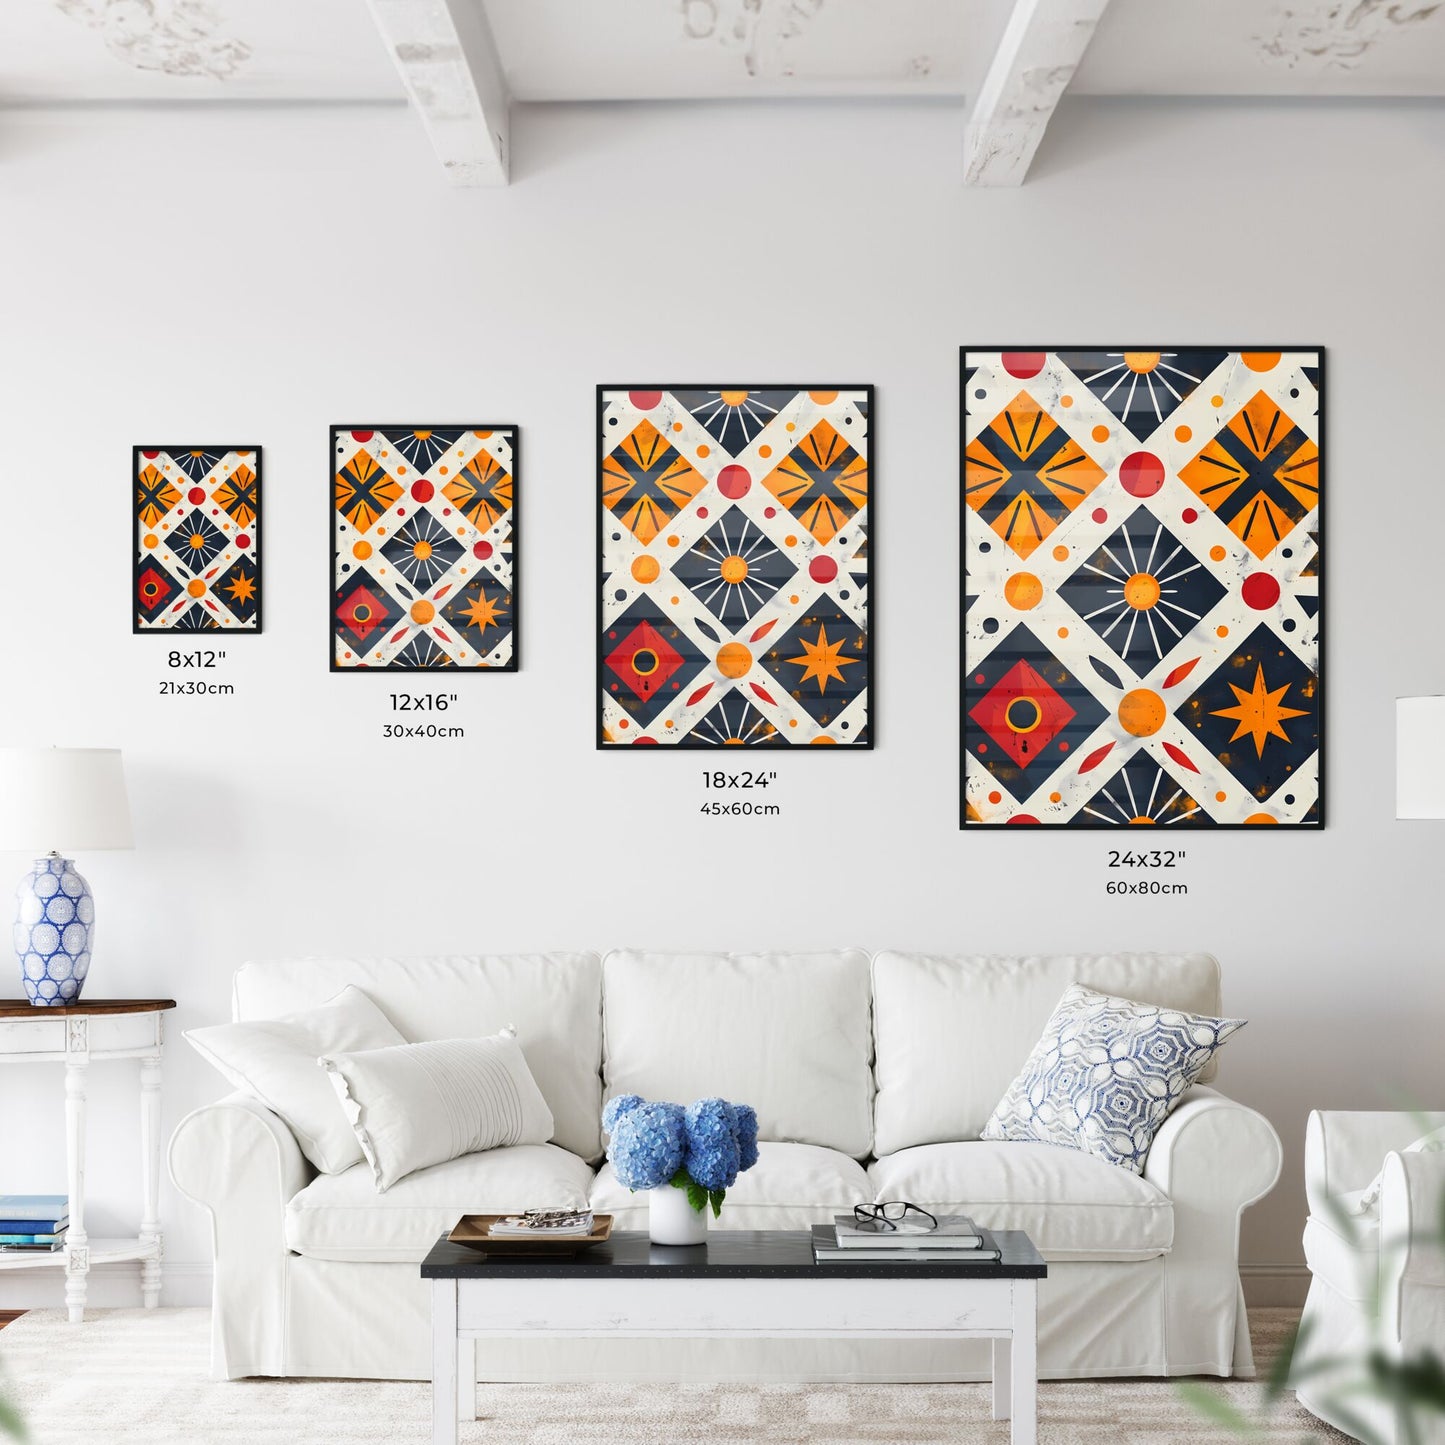 Afro Futuristic Tribal Monochrome Pattern: Vibrant Geometric Artwork in Black and White Default Title